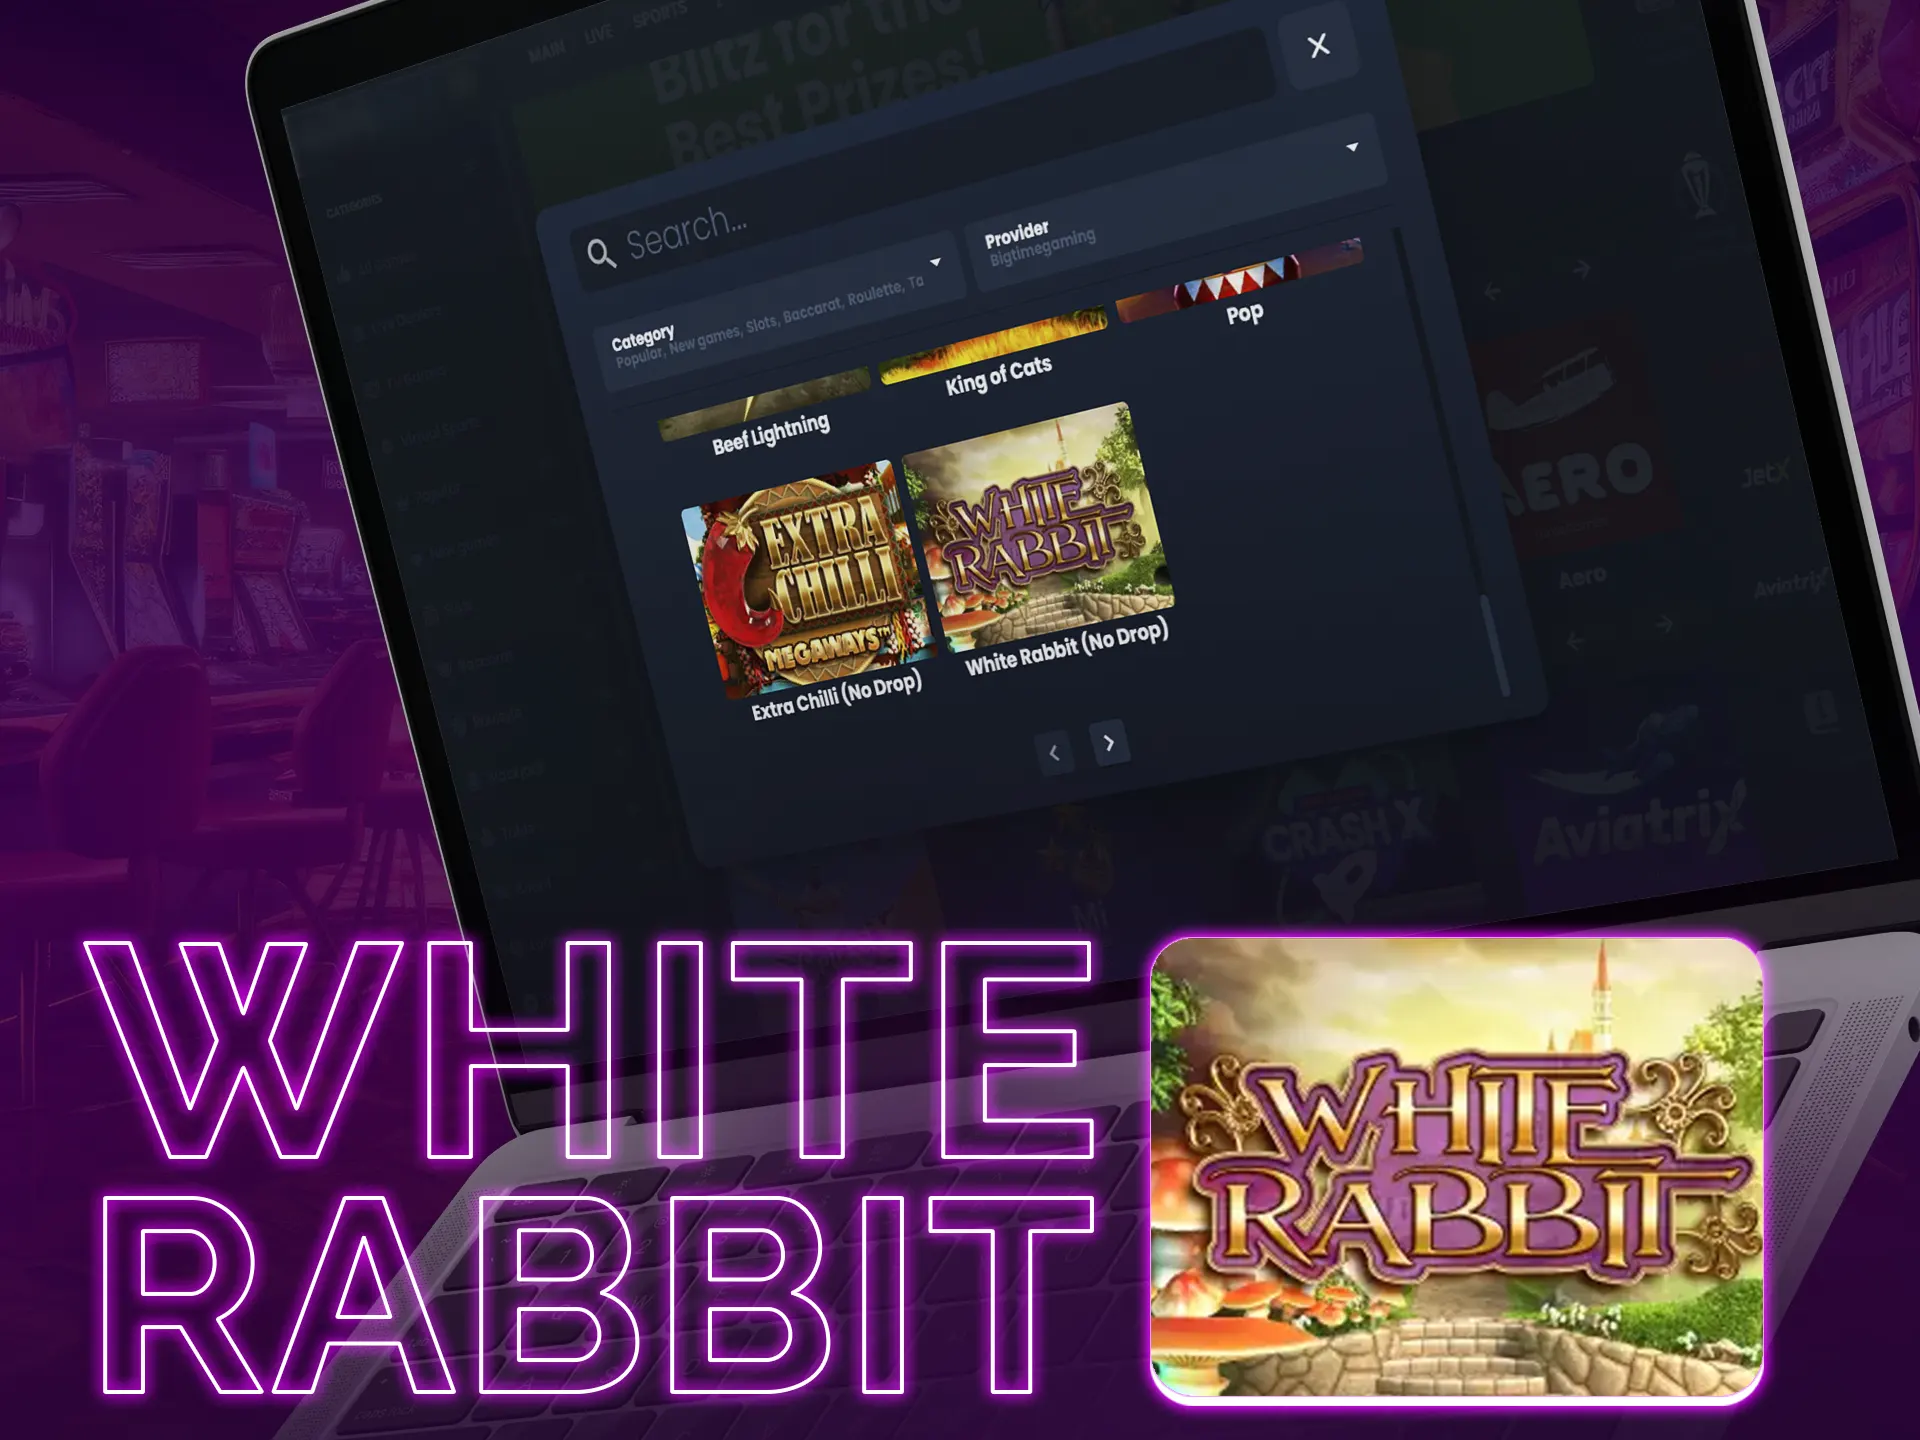 White Rabbit: Alice in Wonderland theme, 5 reels, high RTP.